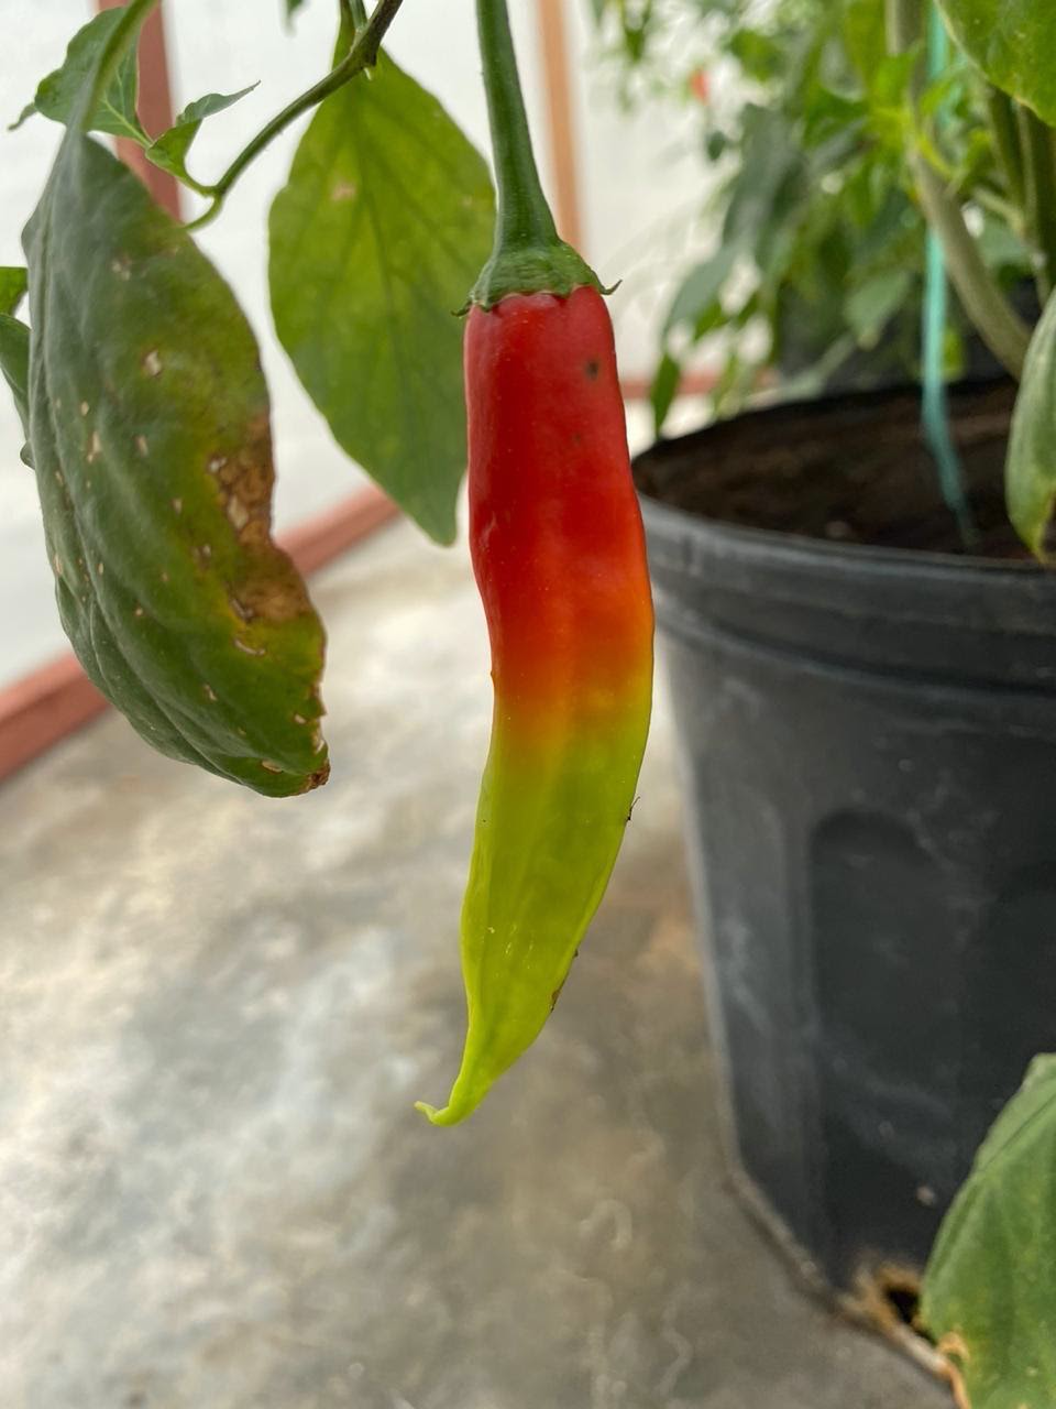 Criollo pepper in red, orange, and green